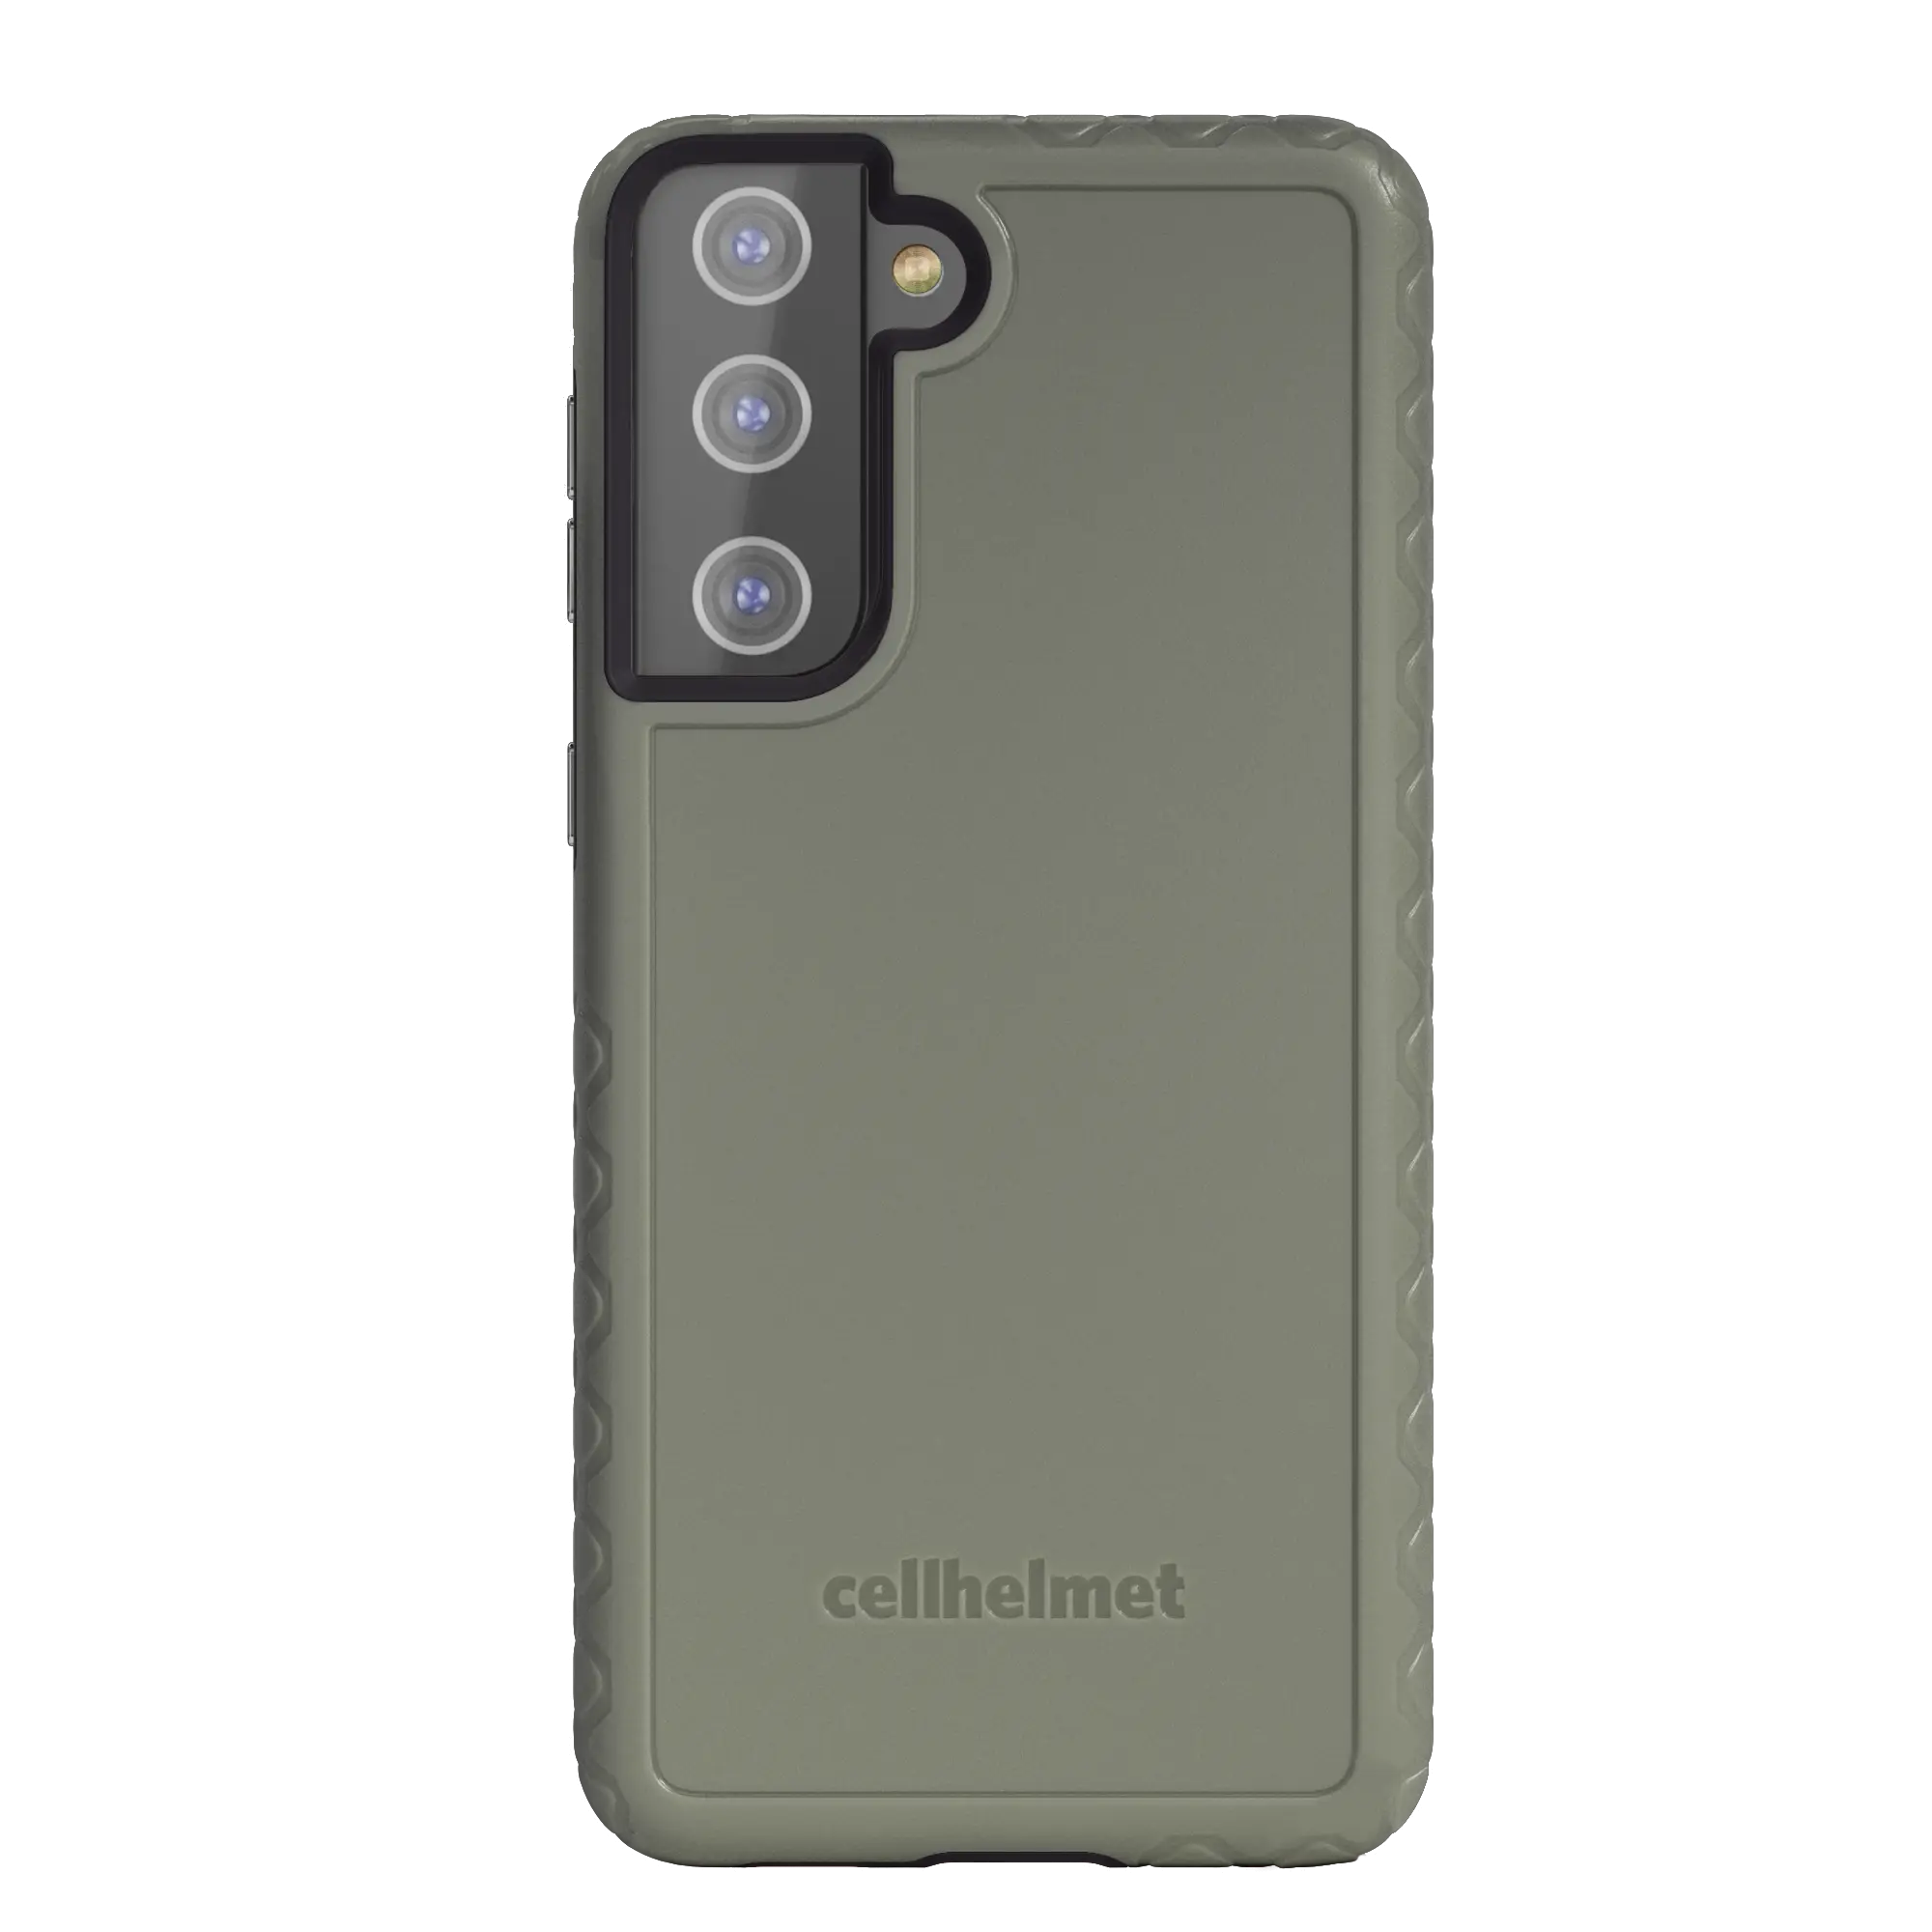 Green cellhelmet Customizable Case for Galaxy S21